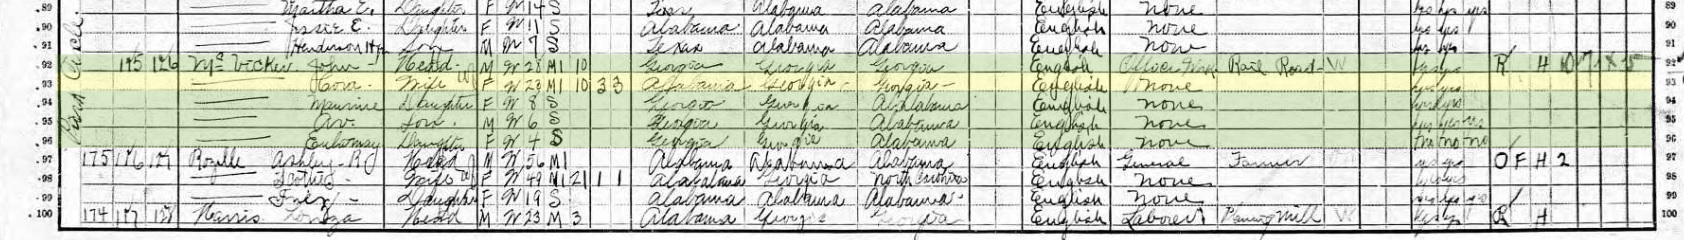 Cora McVivker 1910 Taladaga Albama census